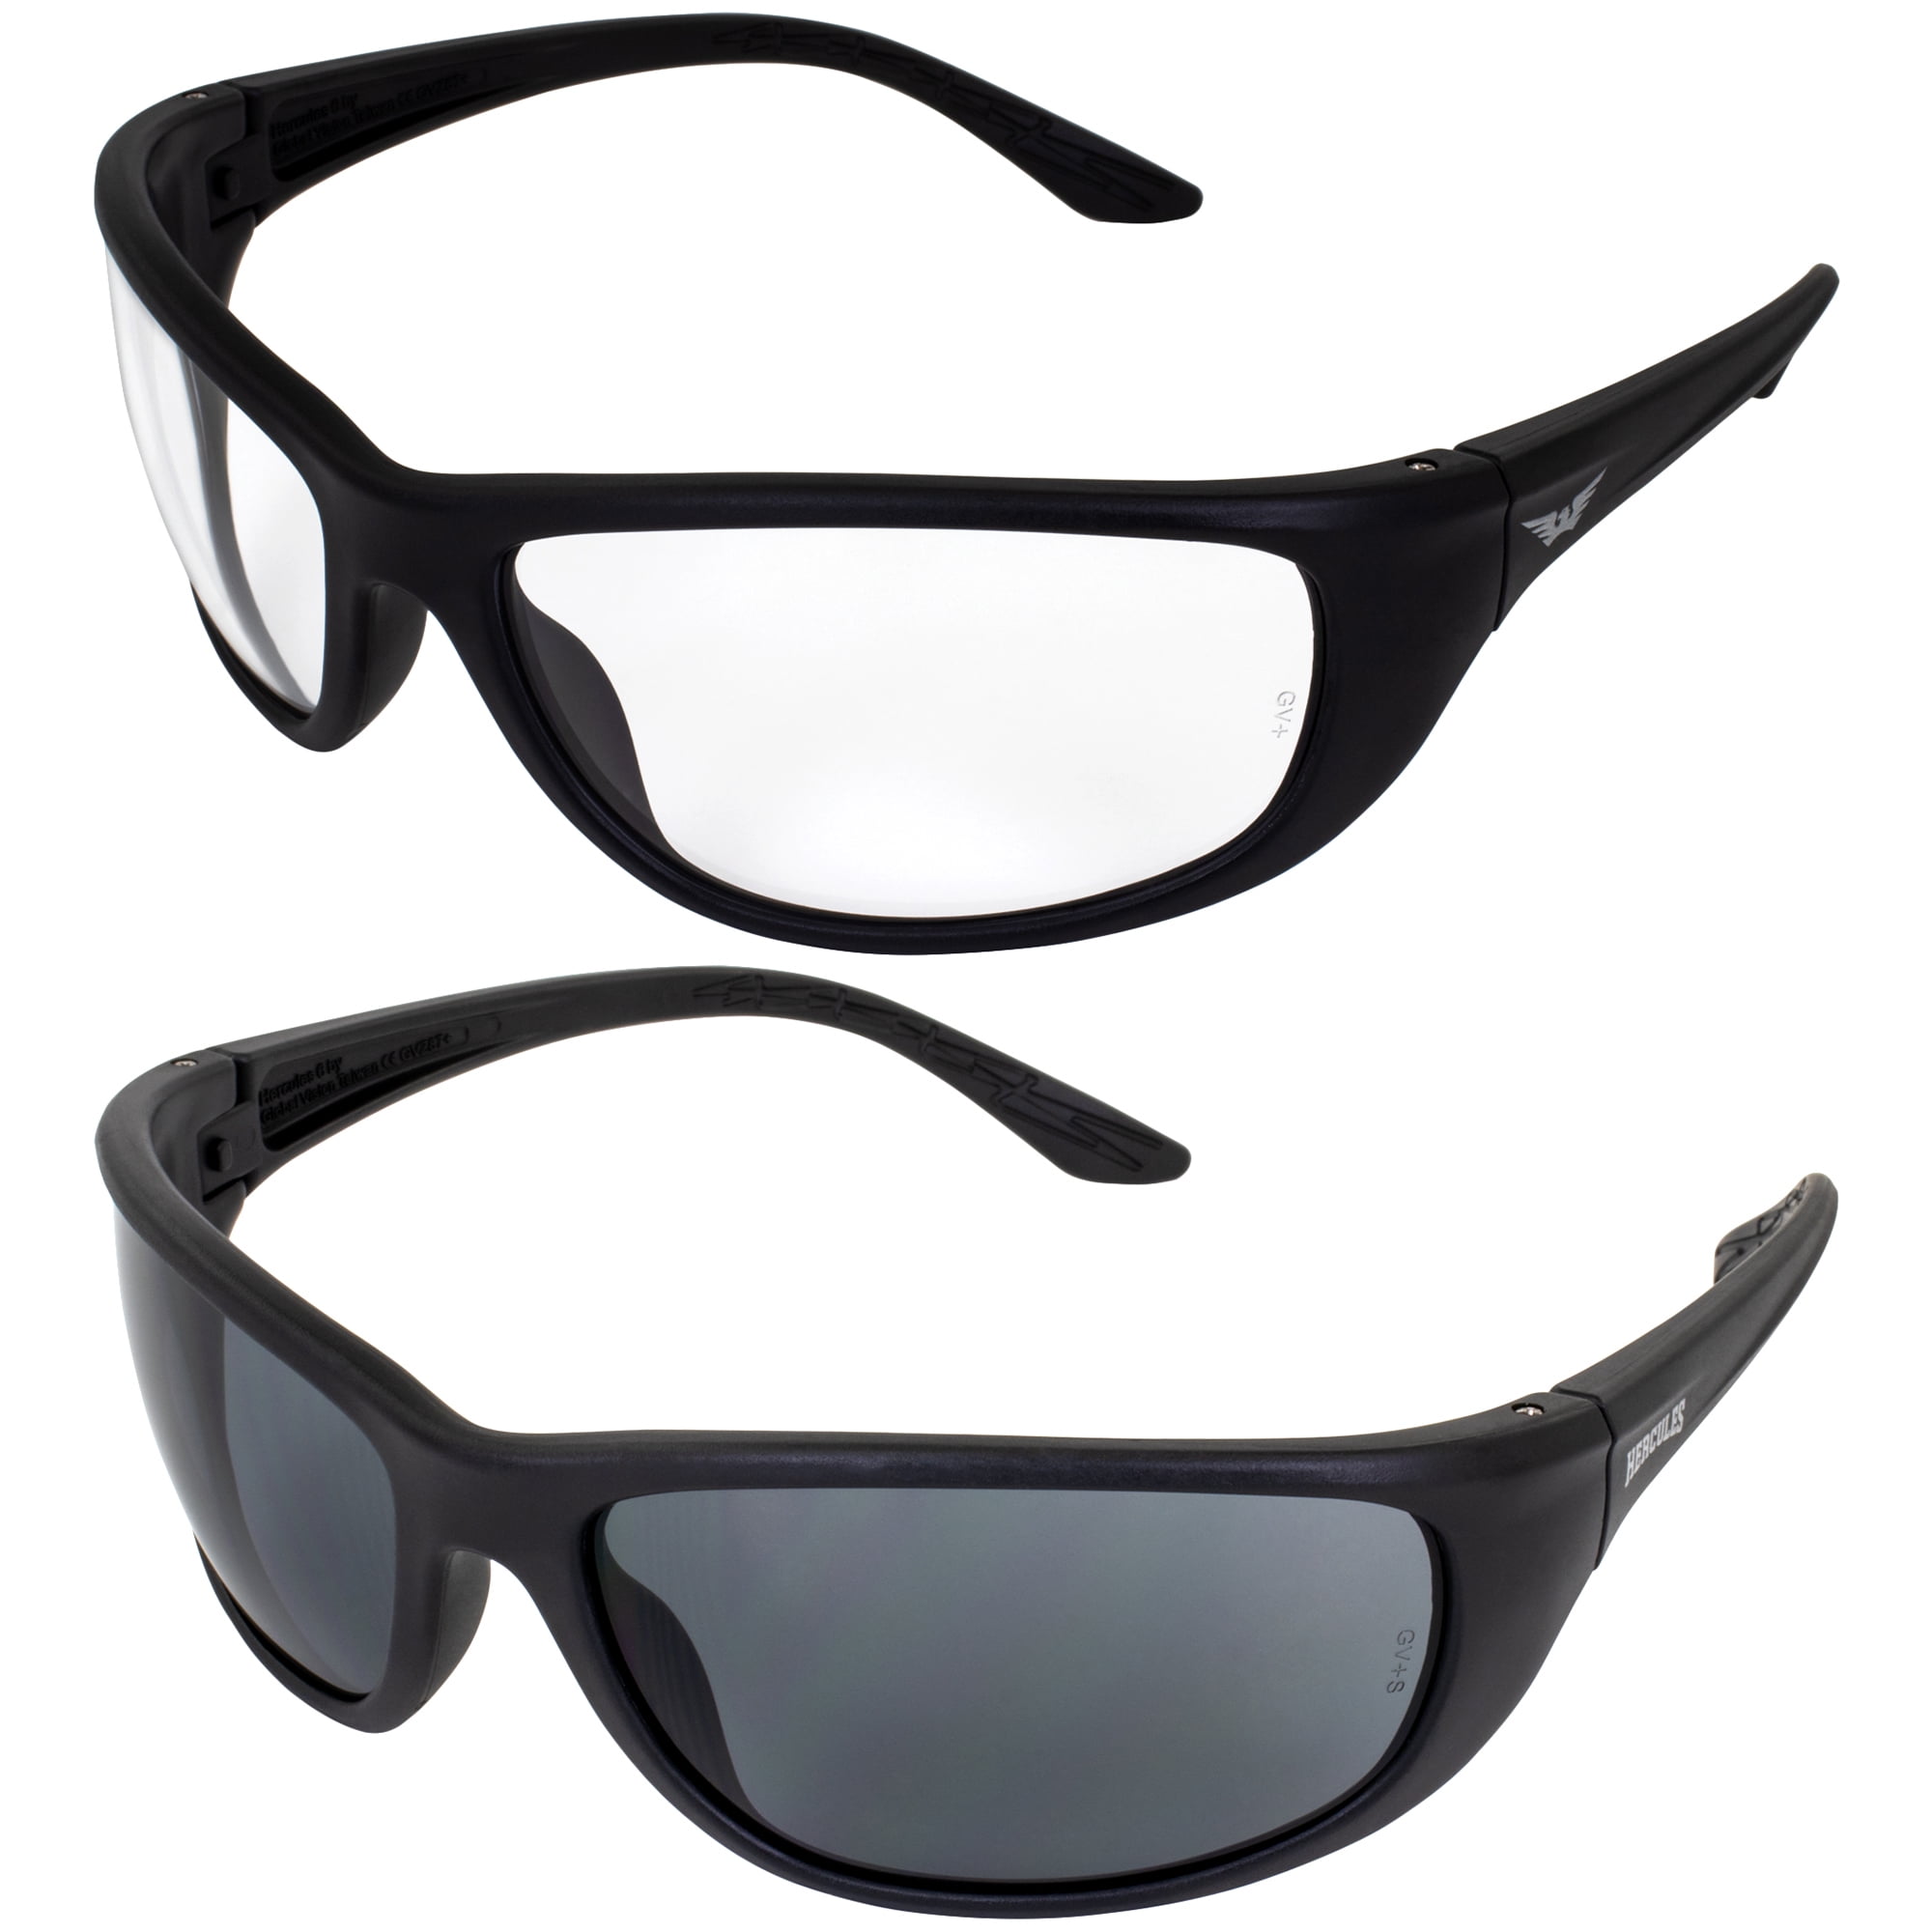 Global Vision Hollywood Safety Sunglasses Matte Black Frames G-Tech Blue Mirror Lenses ANSI Z87.1+ 